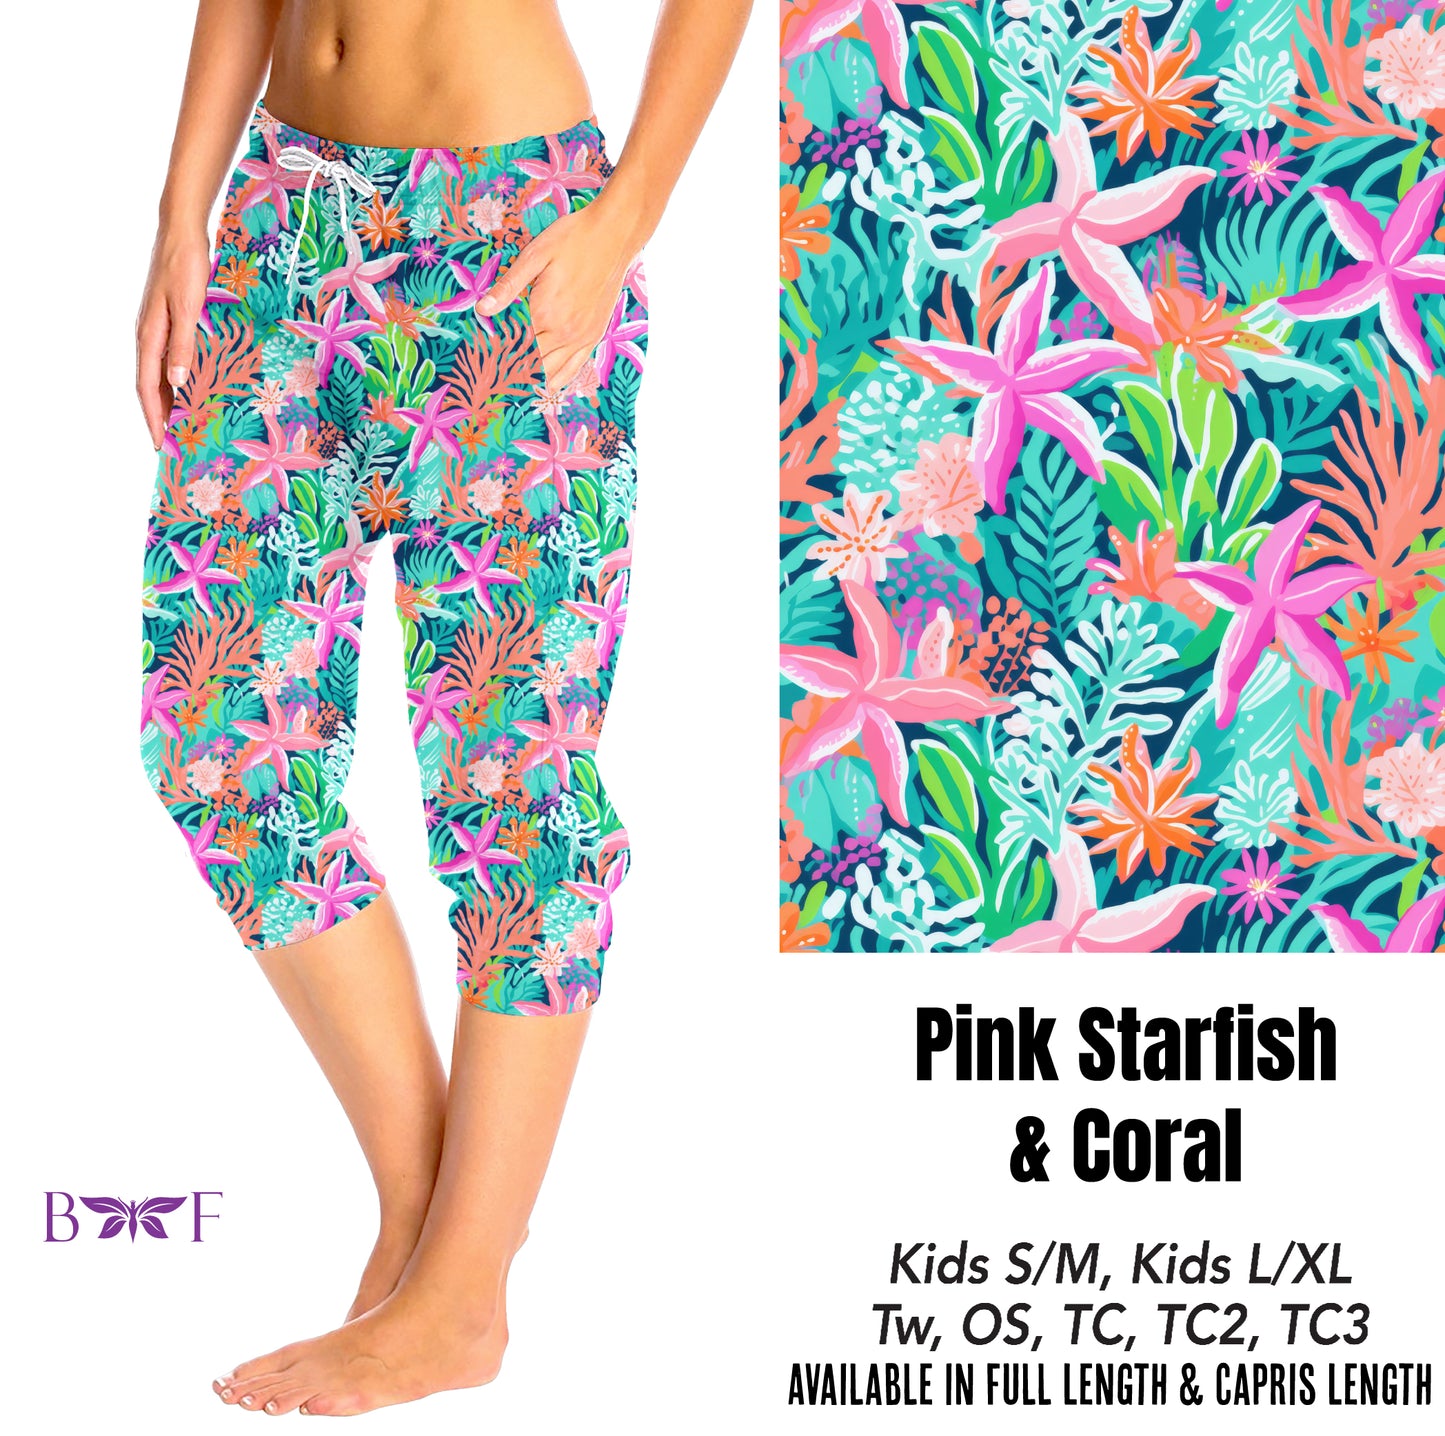 Pink starfish & coral preorder#0515